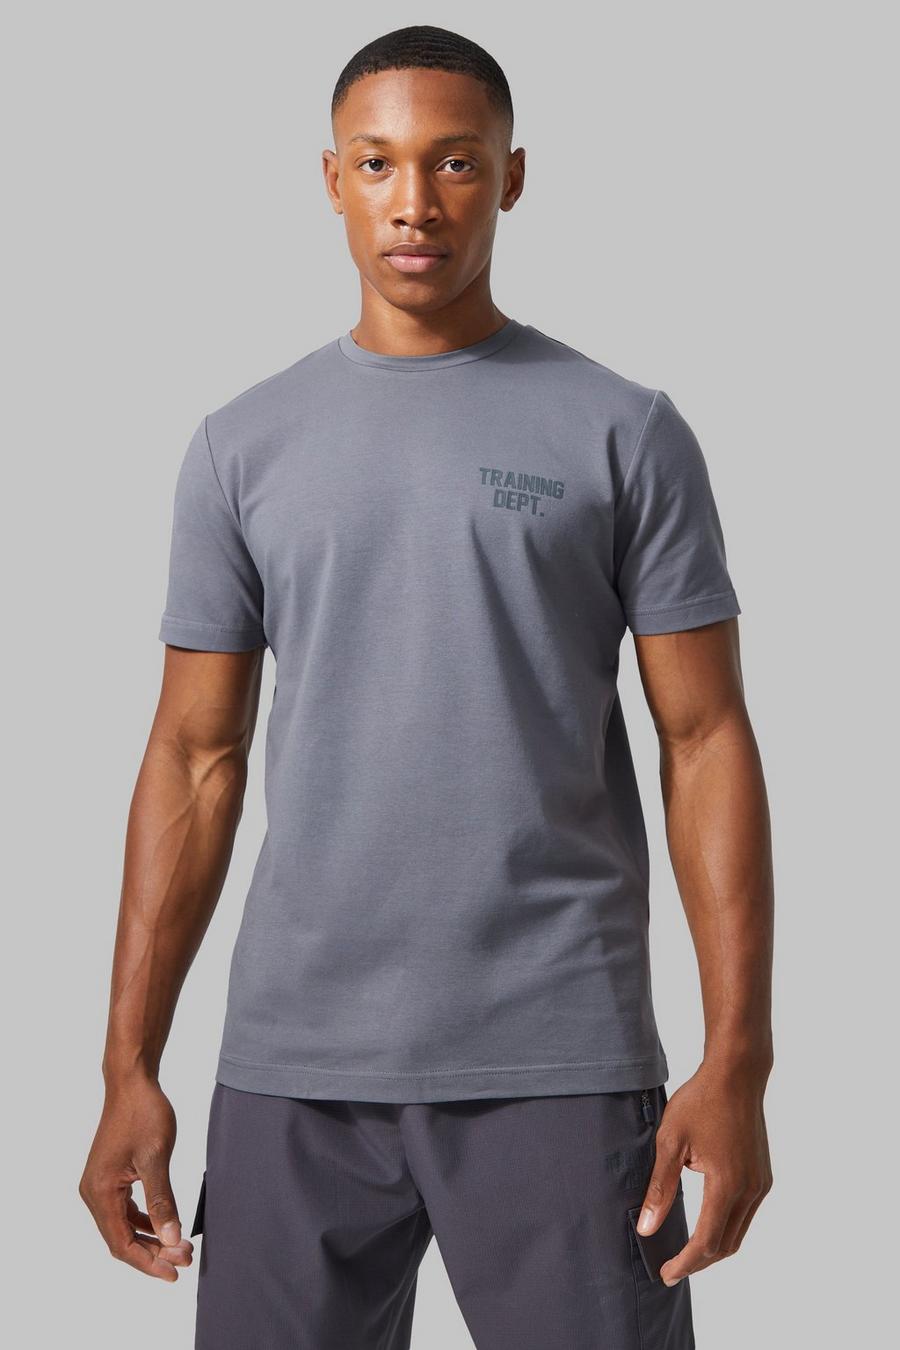 Charcoal Active Training Dept Performance Slim T-shirt